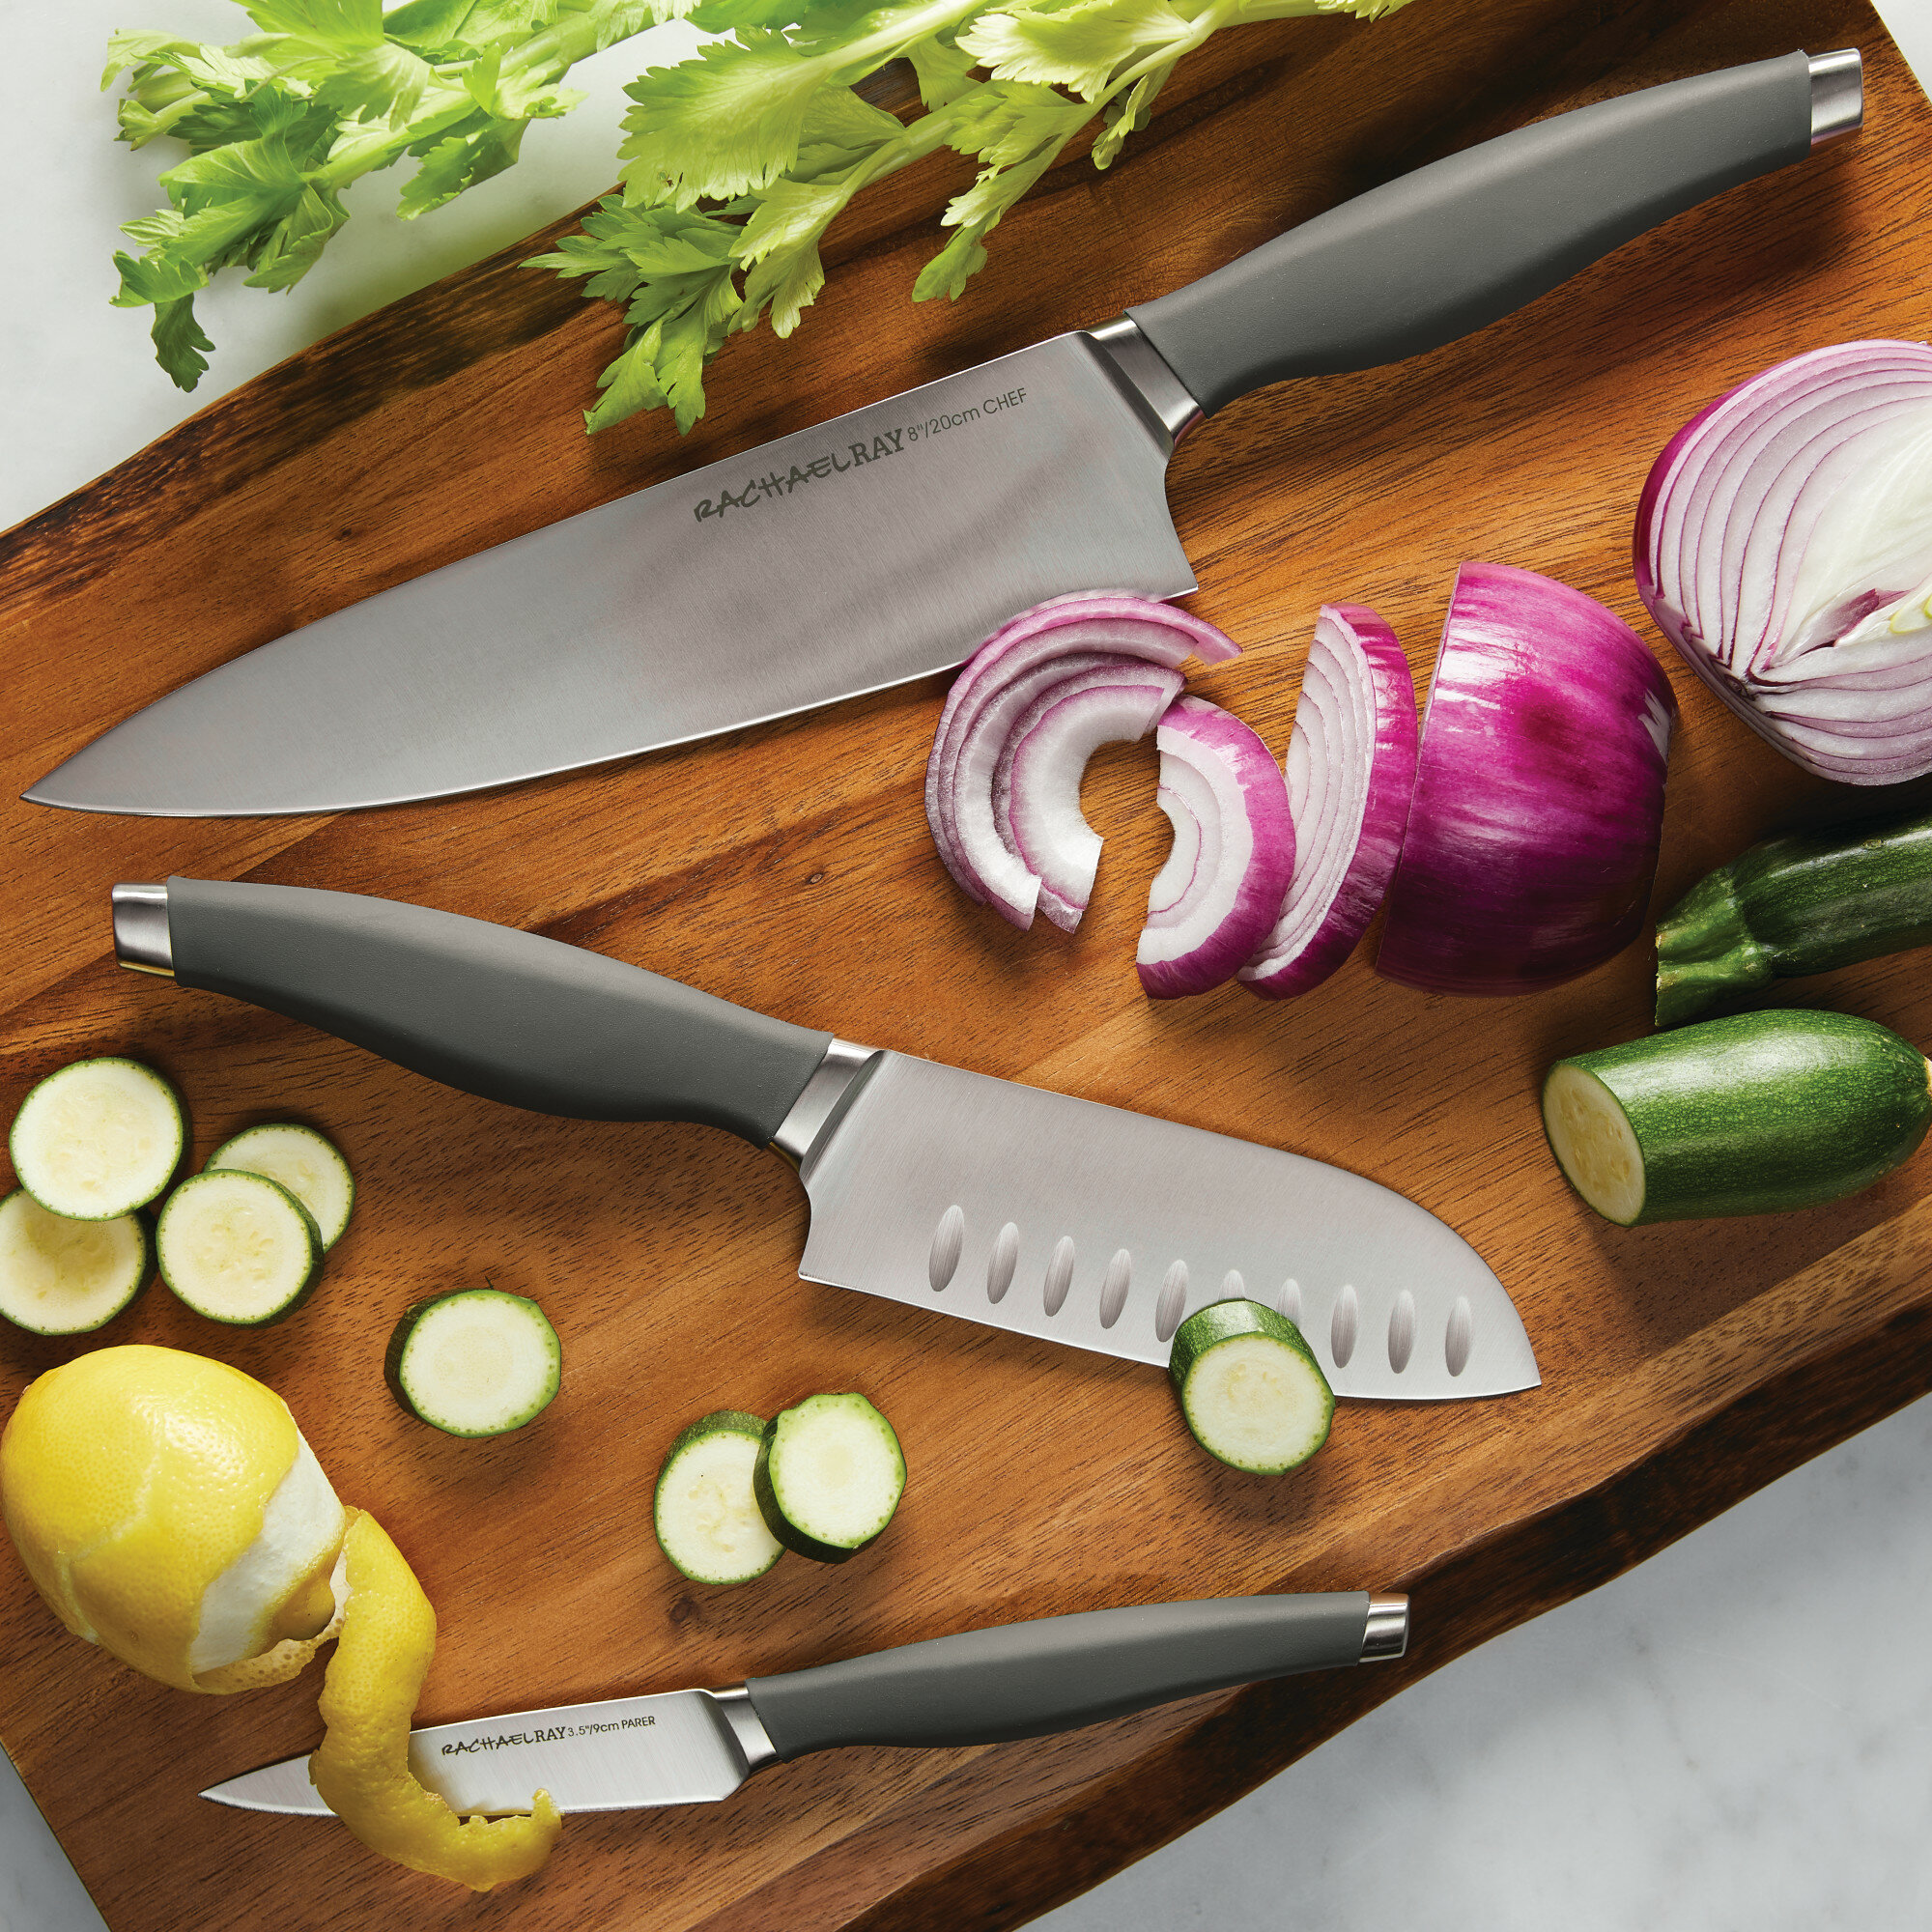 Premium 5 Piece Knife Set  Ultra Sharp Japanese Professional Chef